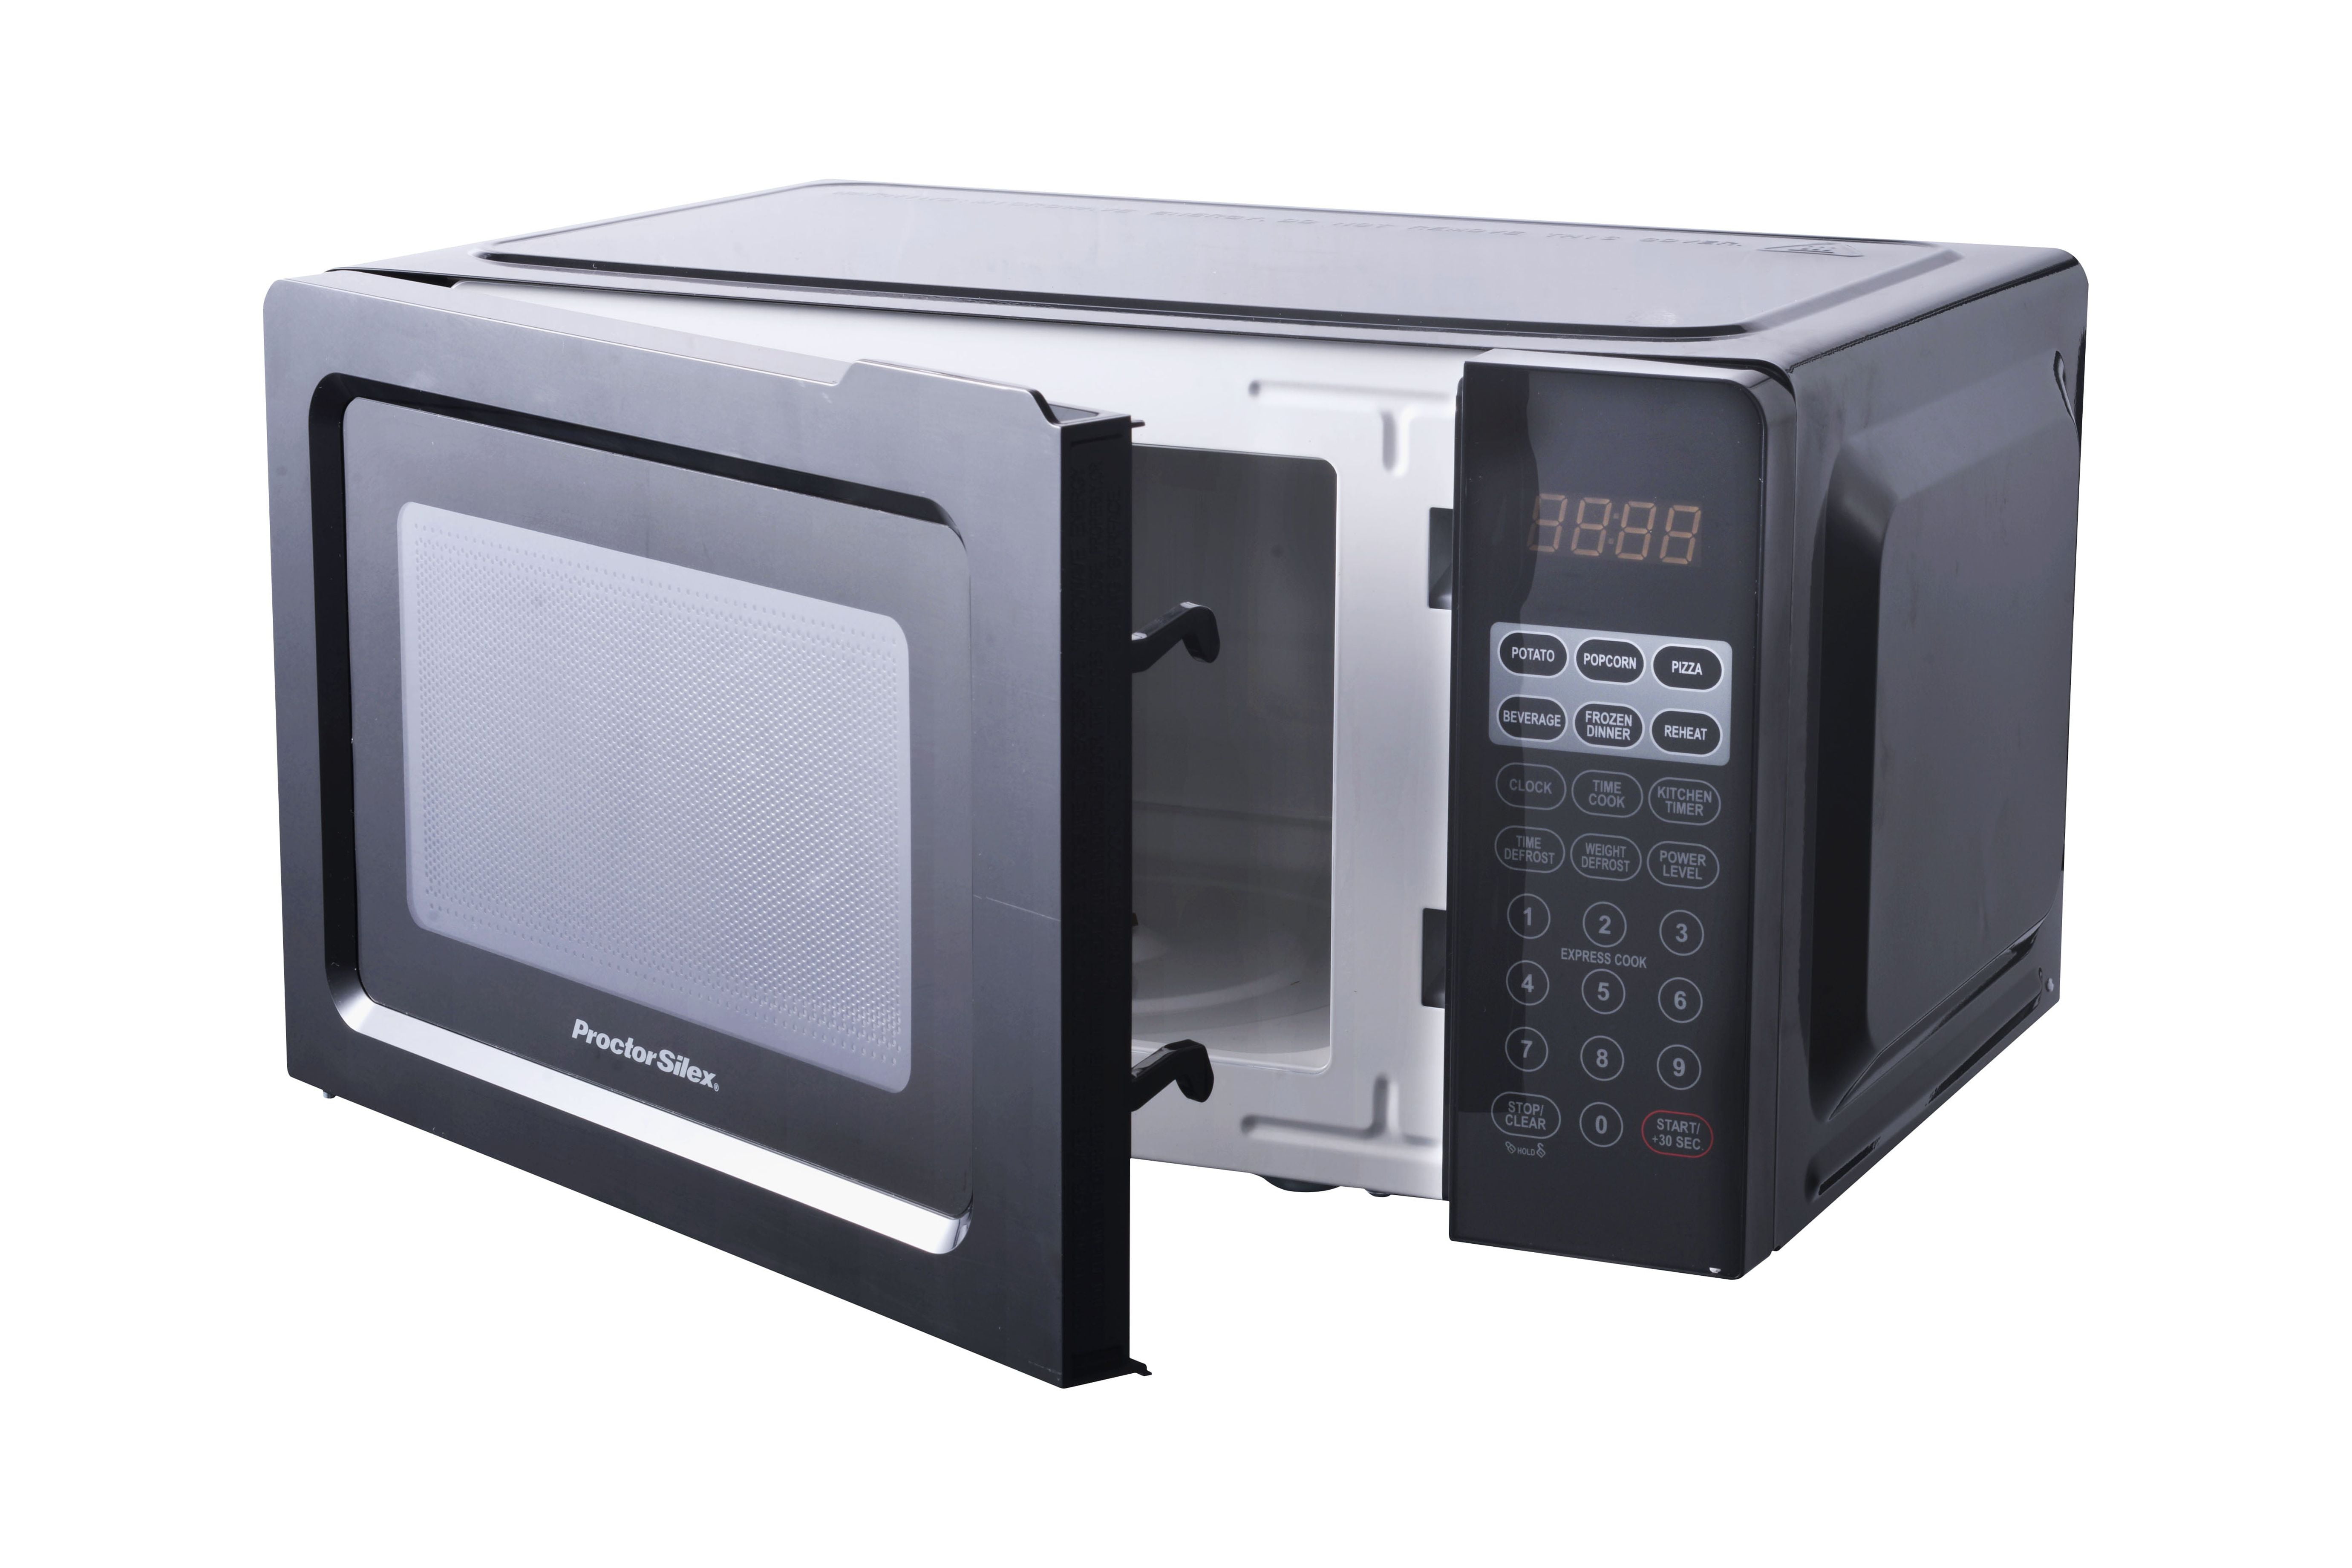 Proctor Silex 700W Countertop Microwave White